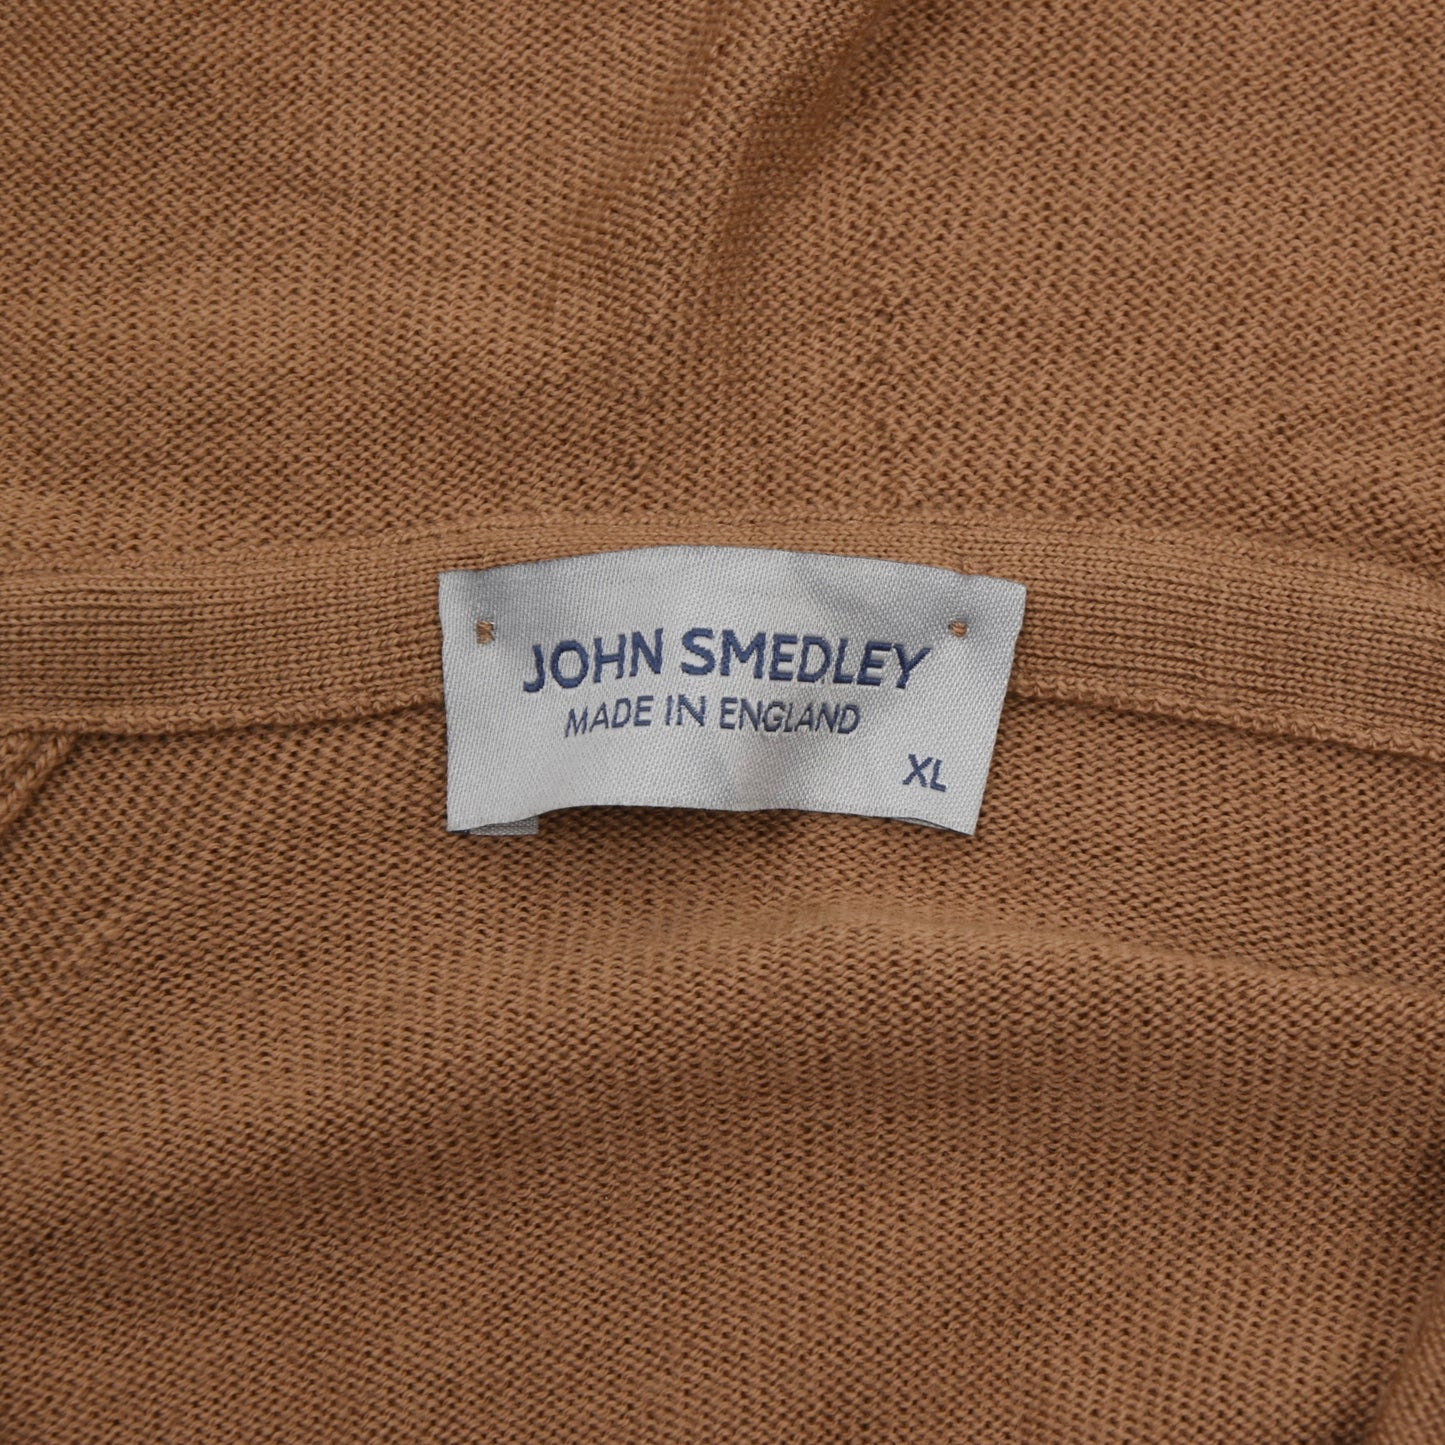 John Smedley Wool Hoodie/Sweater Size XL - Tan